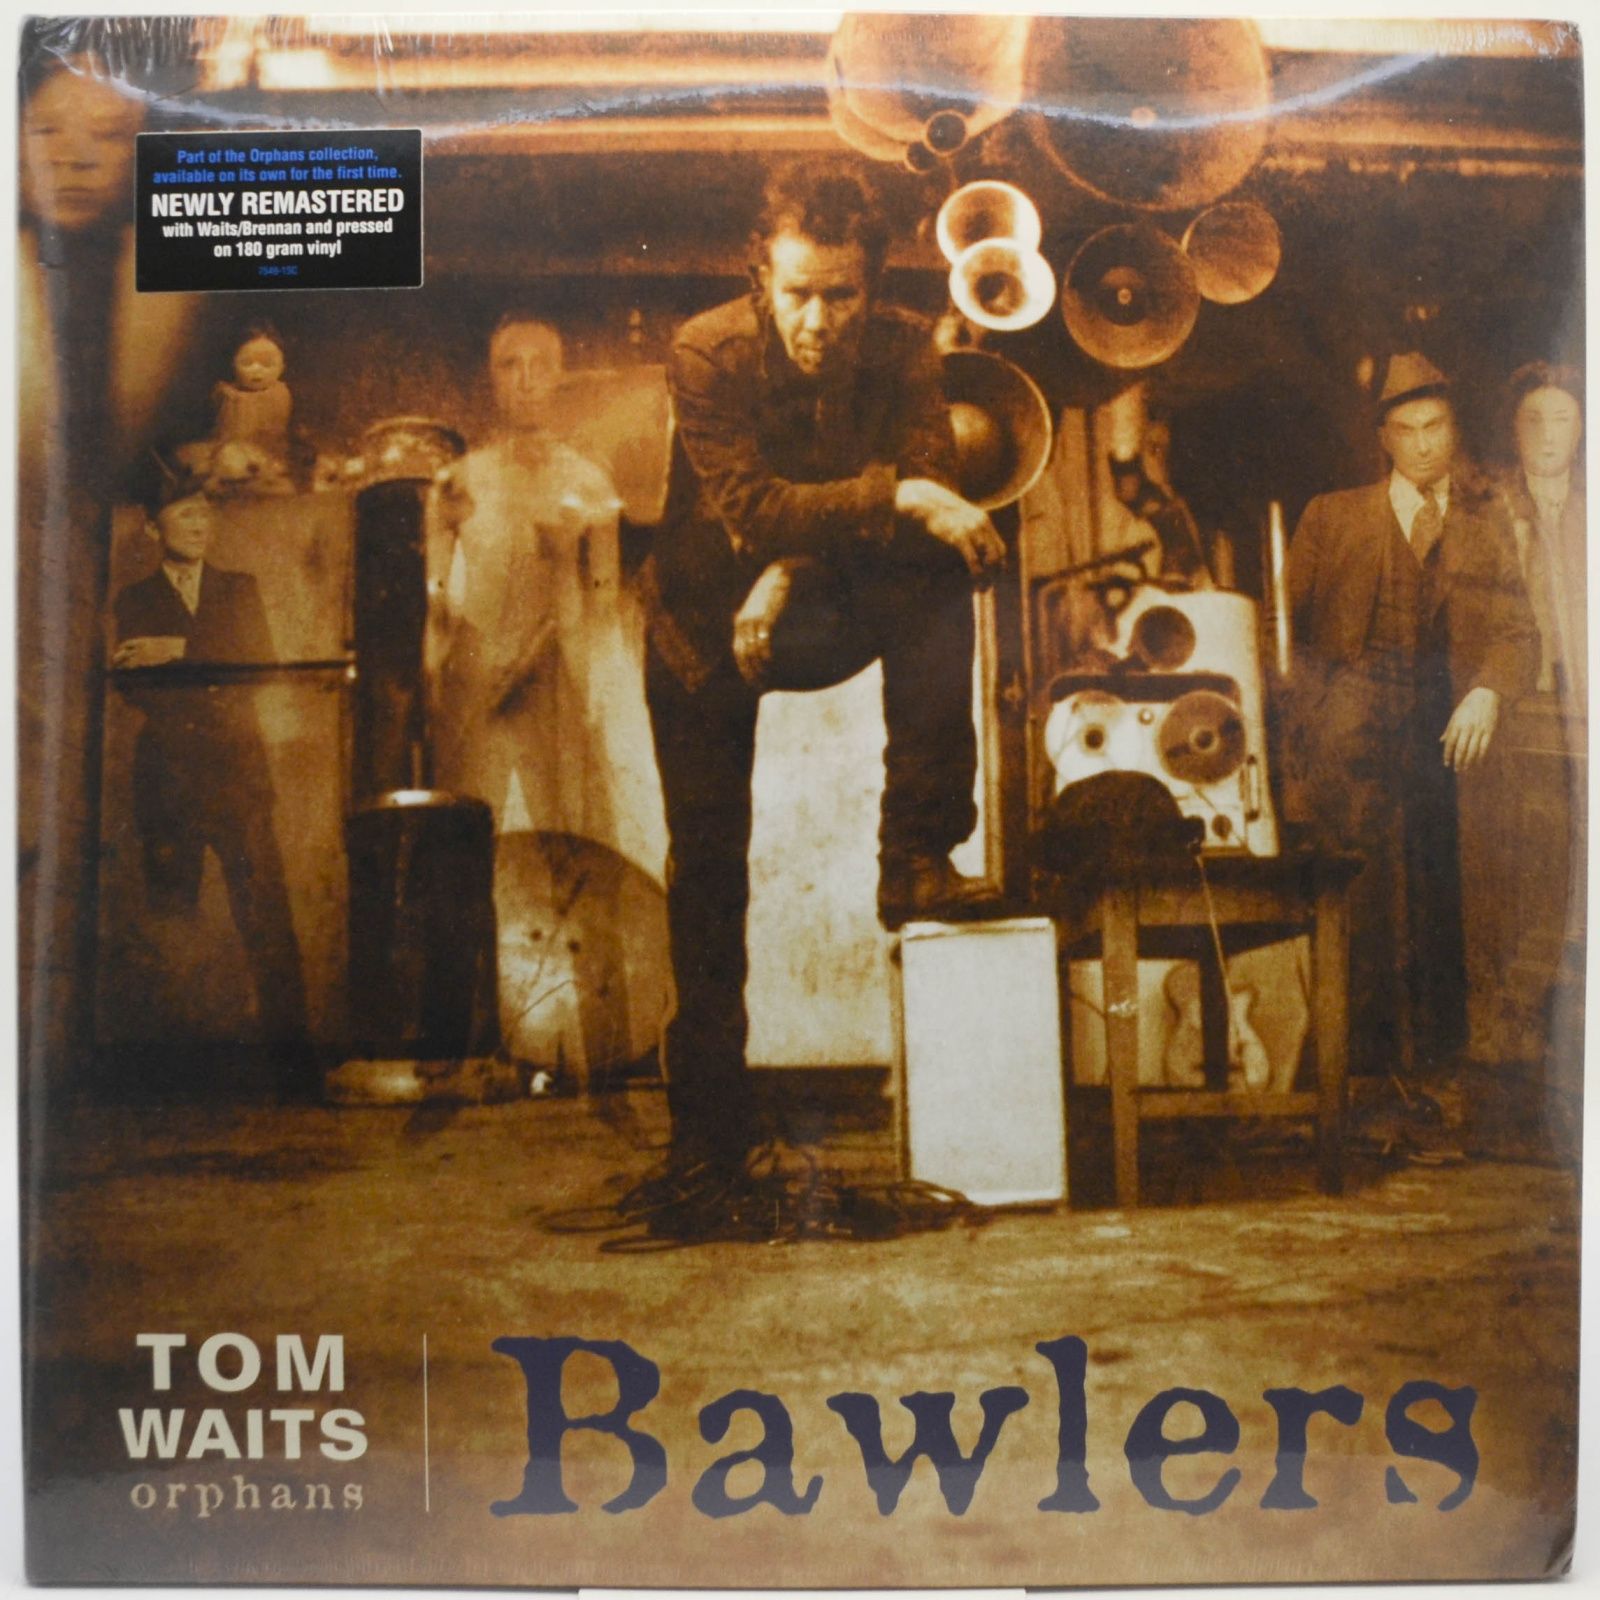 Tom Waits — Bawlers (2LP), 2018